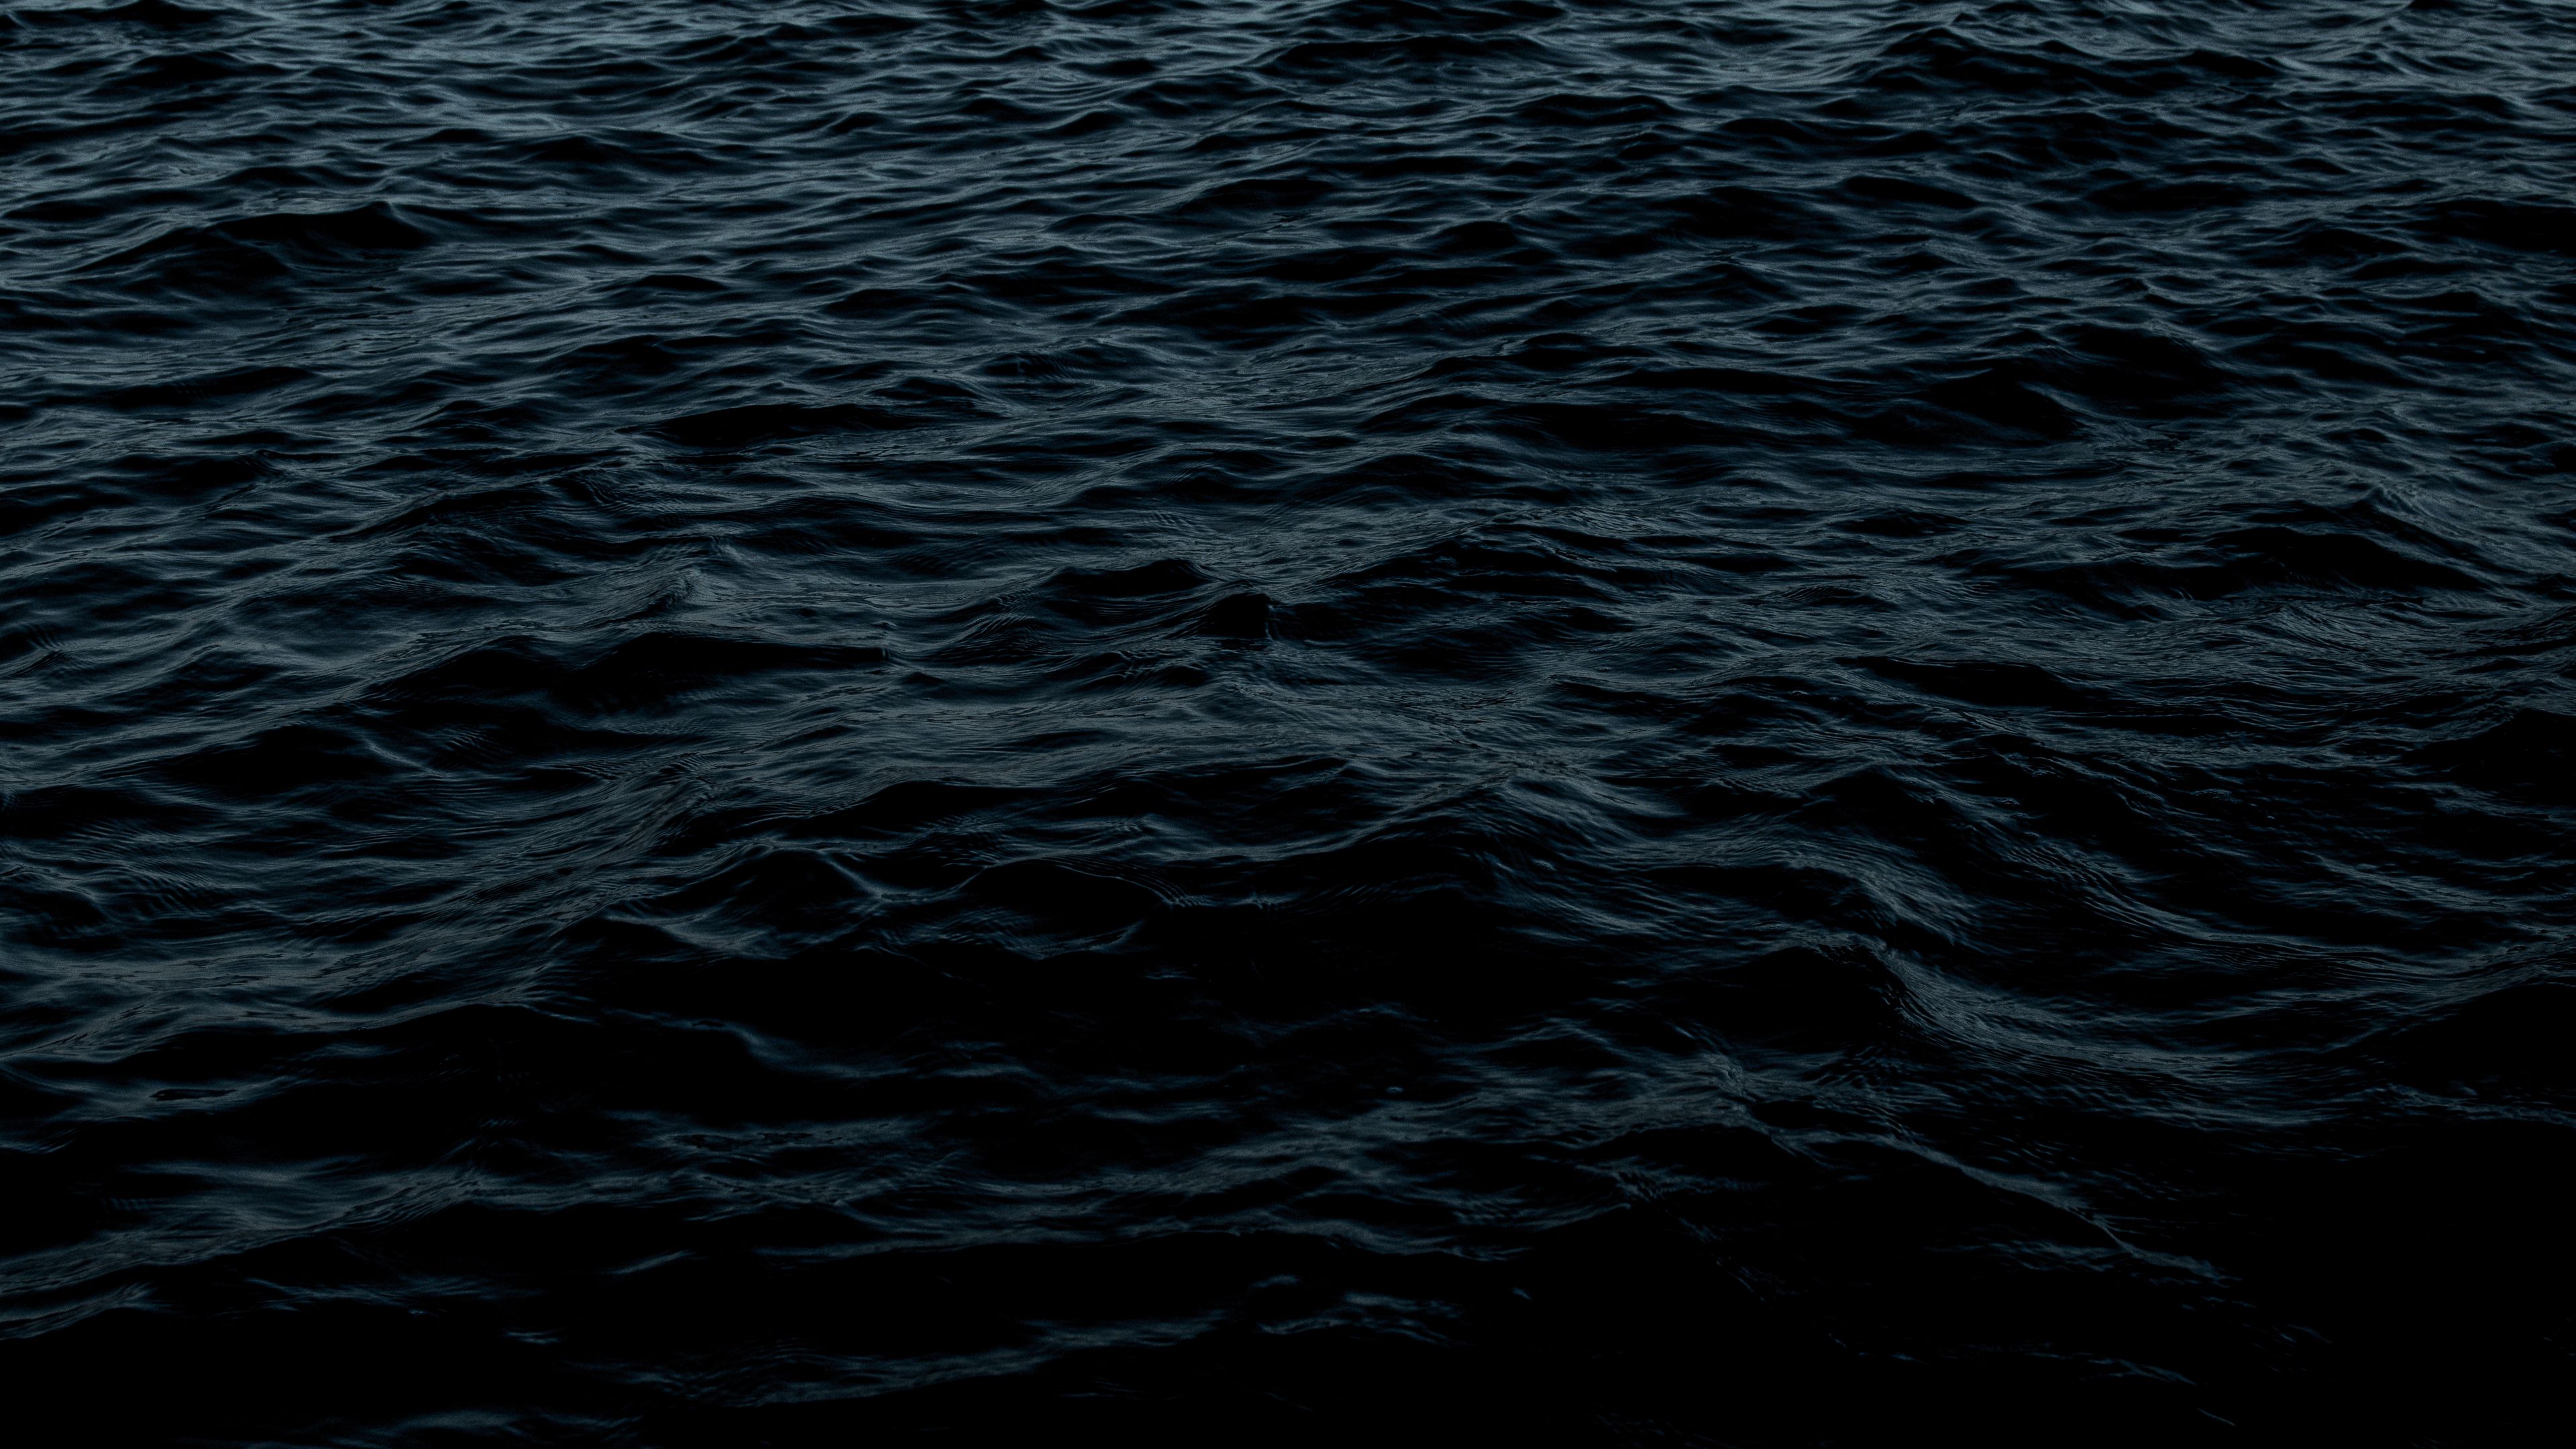 Water droplets on black surface photo  Free Pattern Image on Unsplash